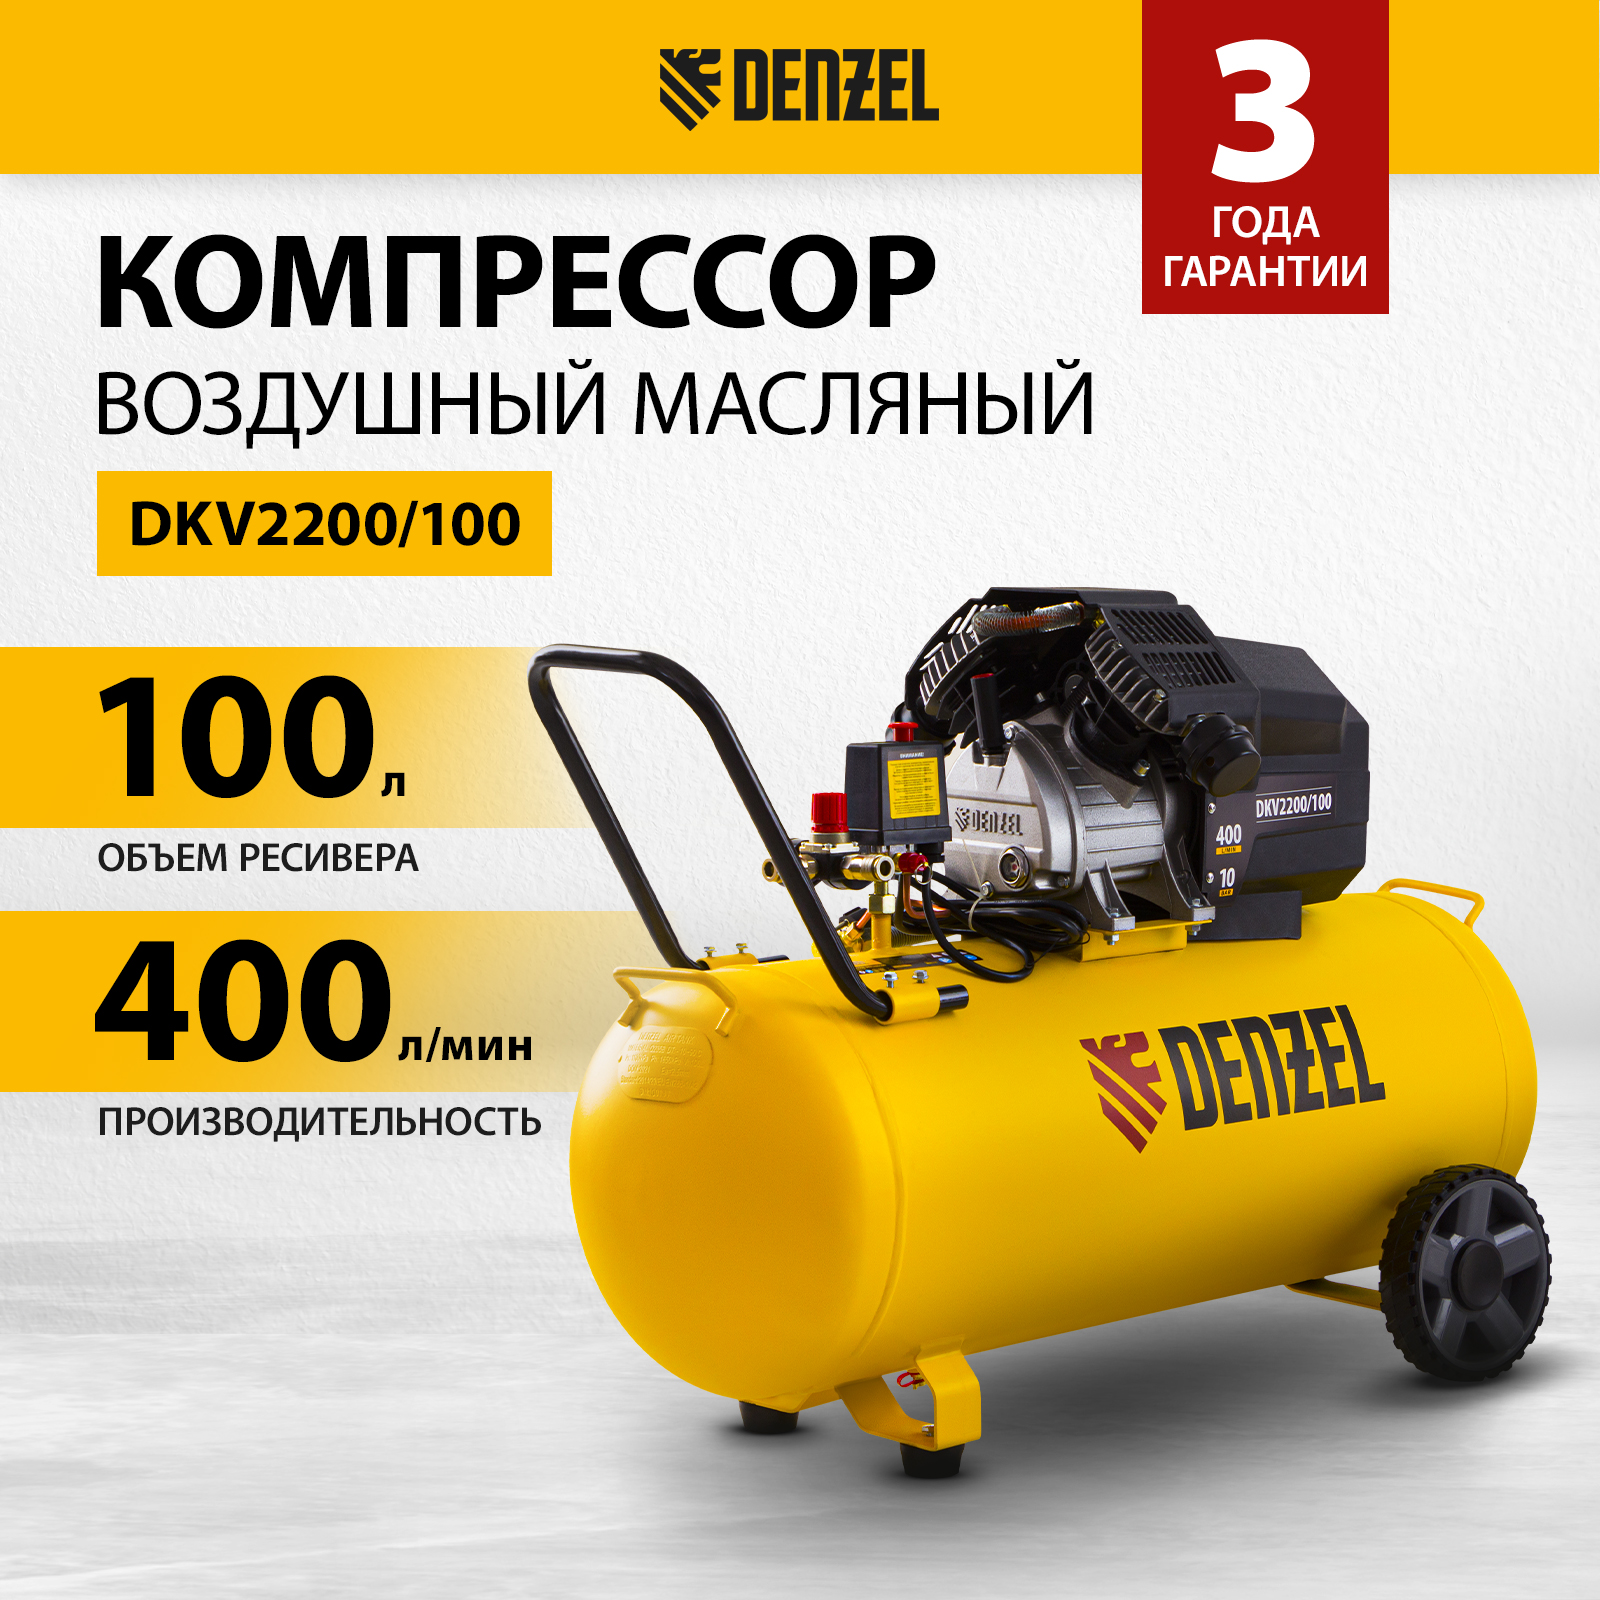 компрессор воздушный dkv2200 50 х pro 2 2 квт 400 л мин 50 л denzel Компрессор воздушный DENZEL DKV2200/100 Х-PRO 58079